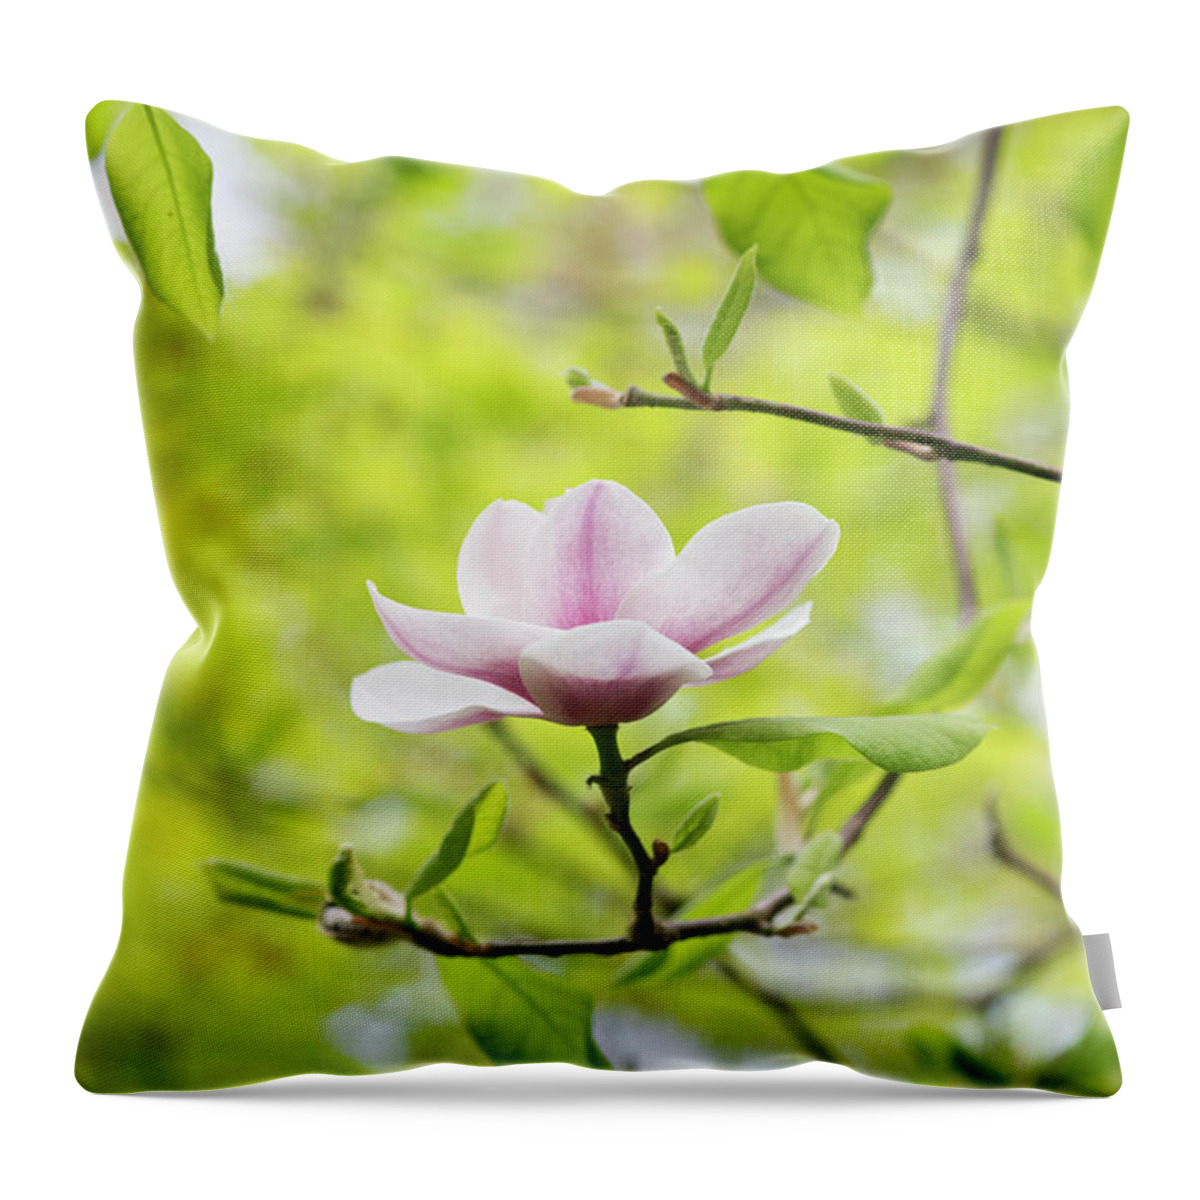 Magnolia Purple Platter Throw Pillow featuring the photograph Magnolia Purple Platter Flower by Tim Gainey